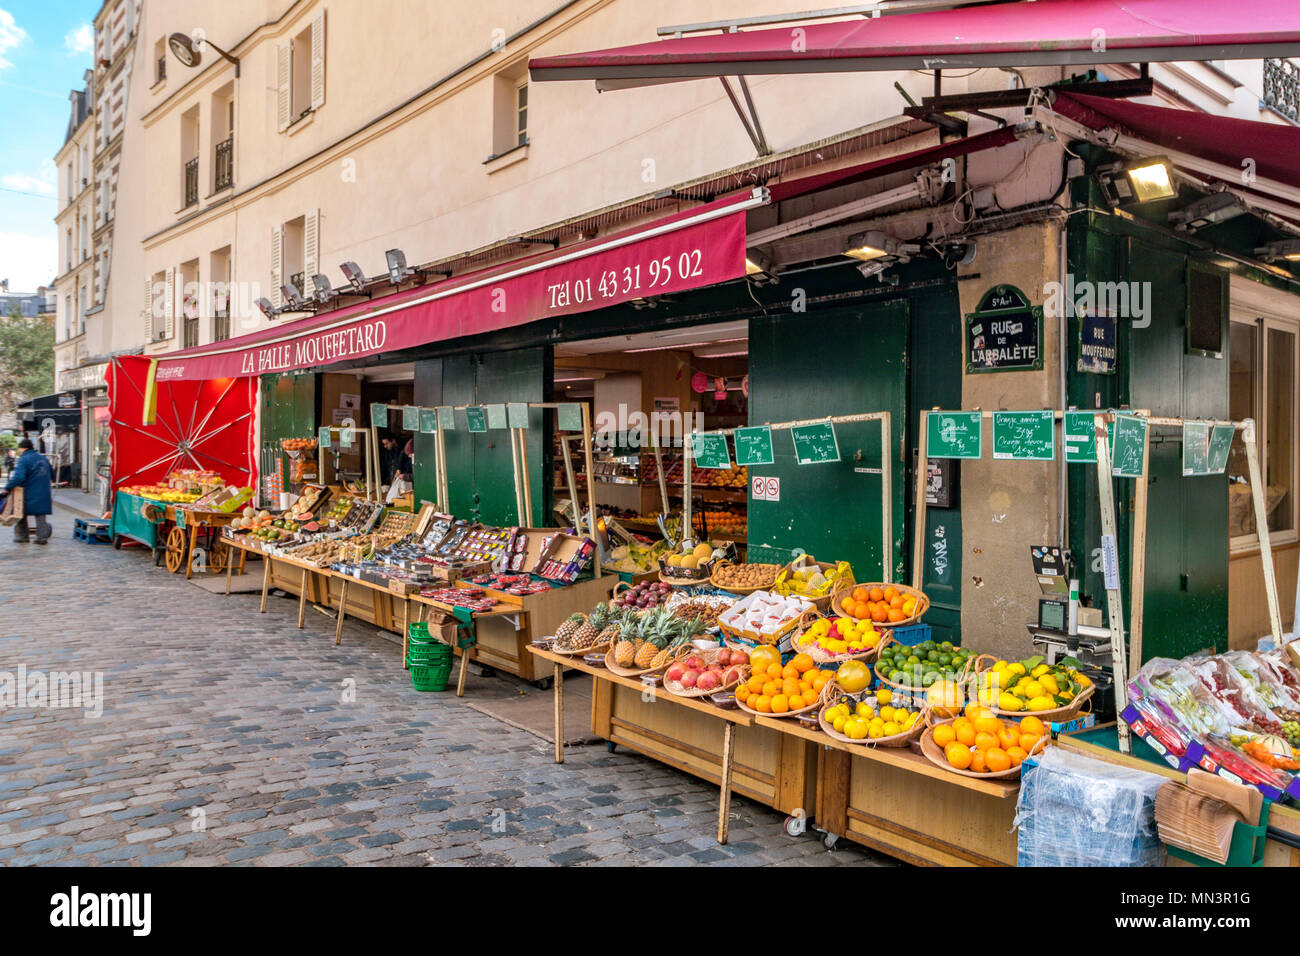 La Halle Mouffetard a fruit and vegetable shop on Rue Mouffetard, Paris, France Stock Photo